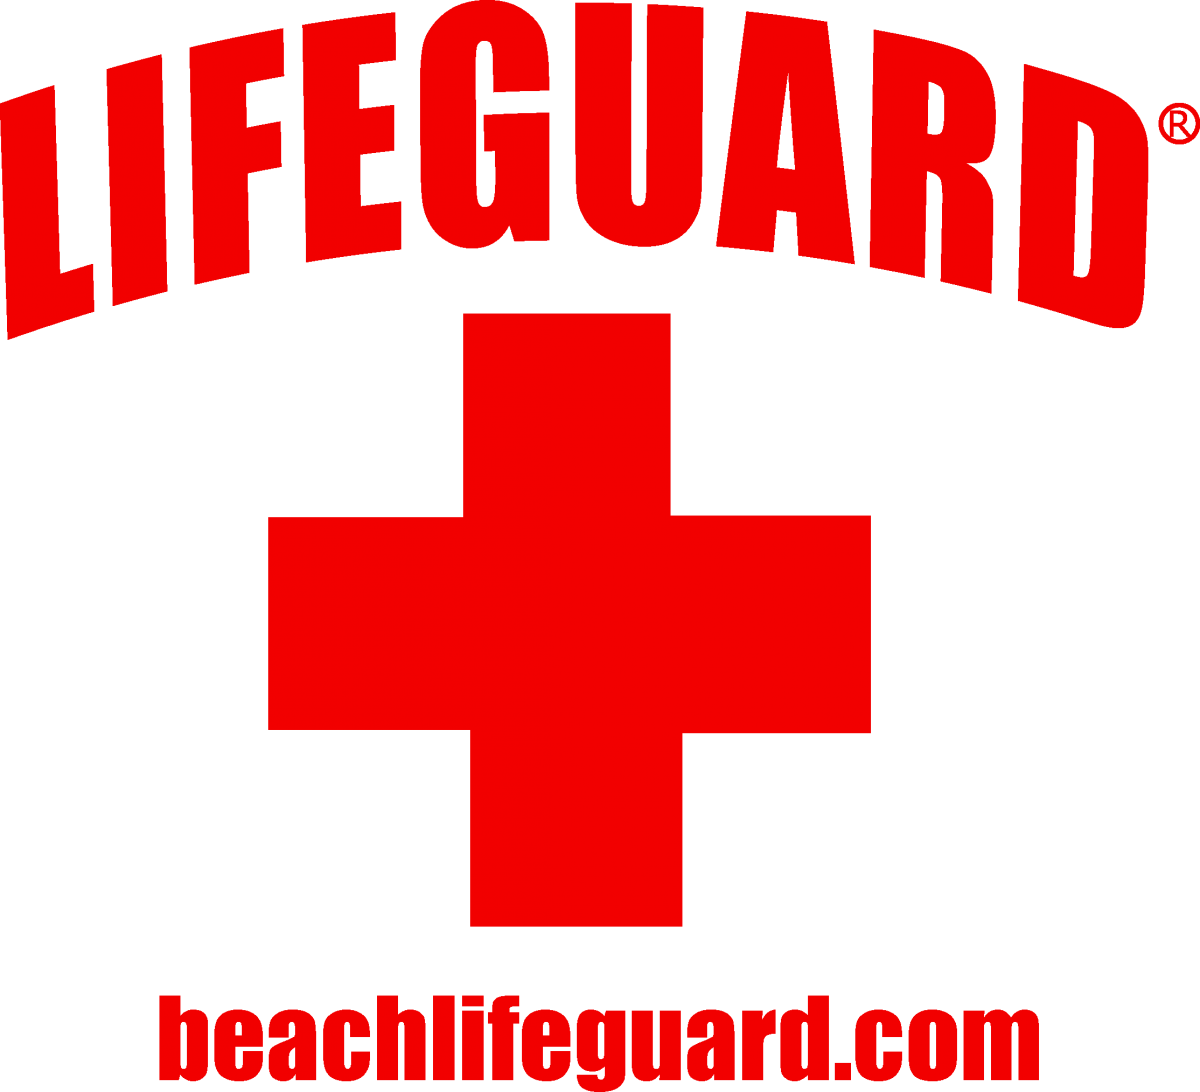 Download 70 Lifeguard vector images at Vectorified.com